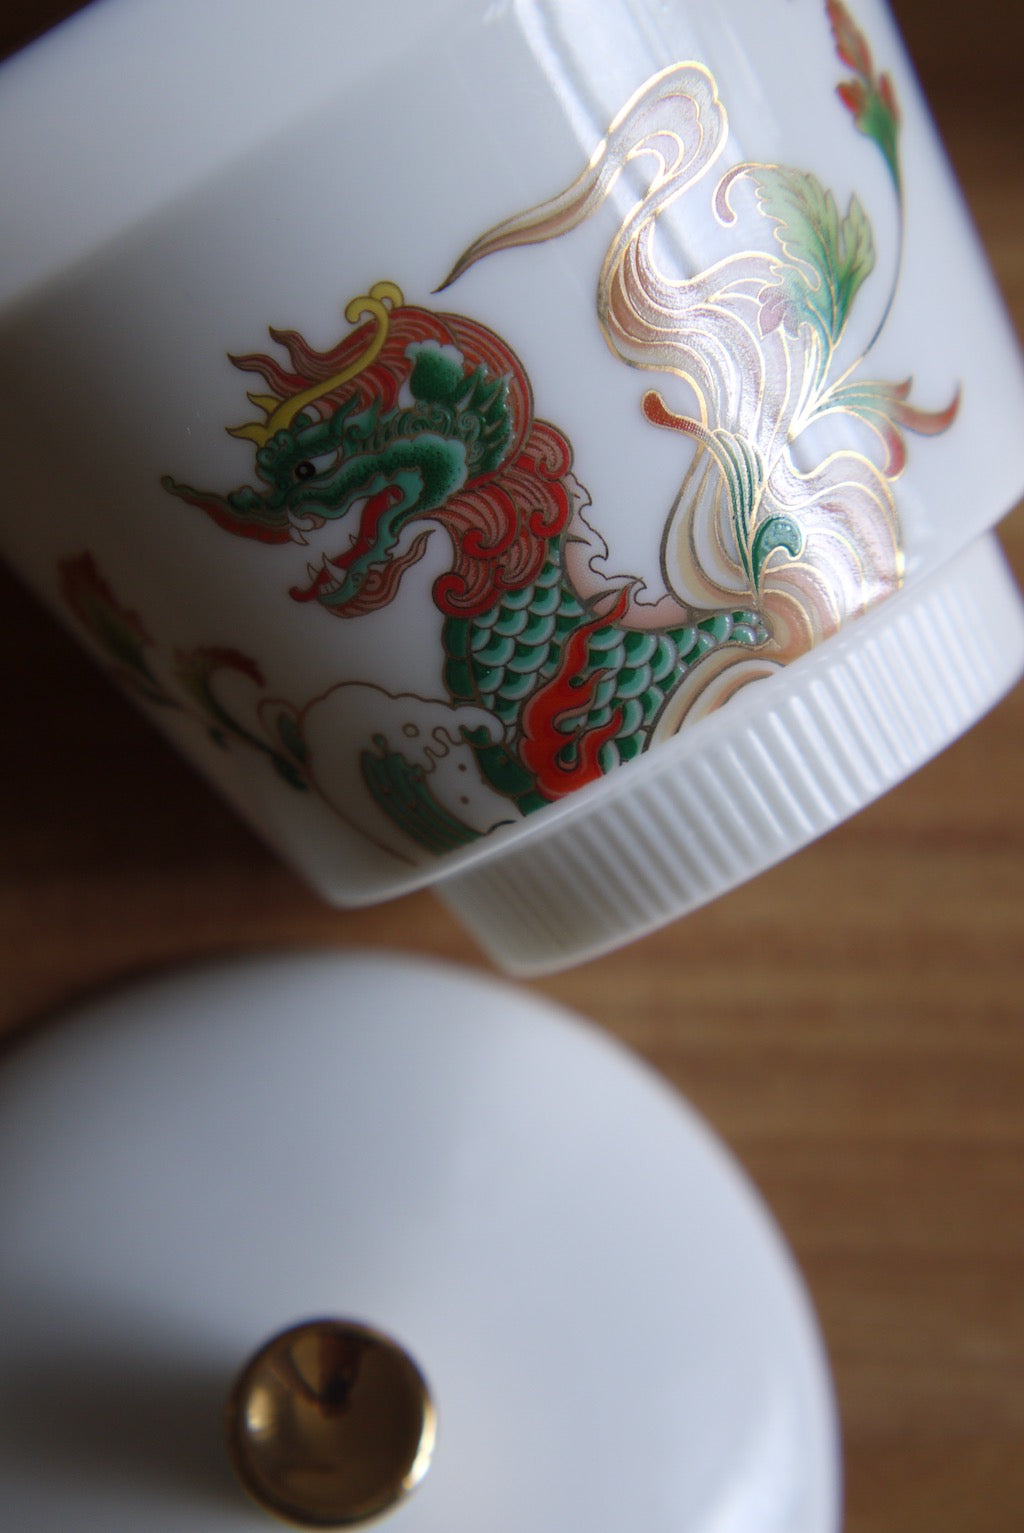 Dragon Design Vintage Blanc De Chine Kungfu Gaiwan Teaset|Best Ceramics